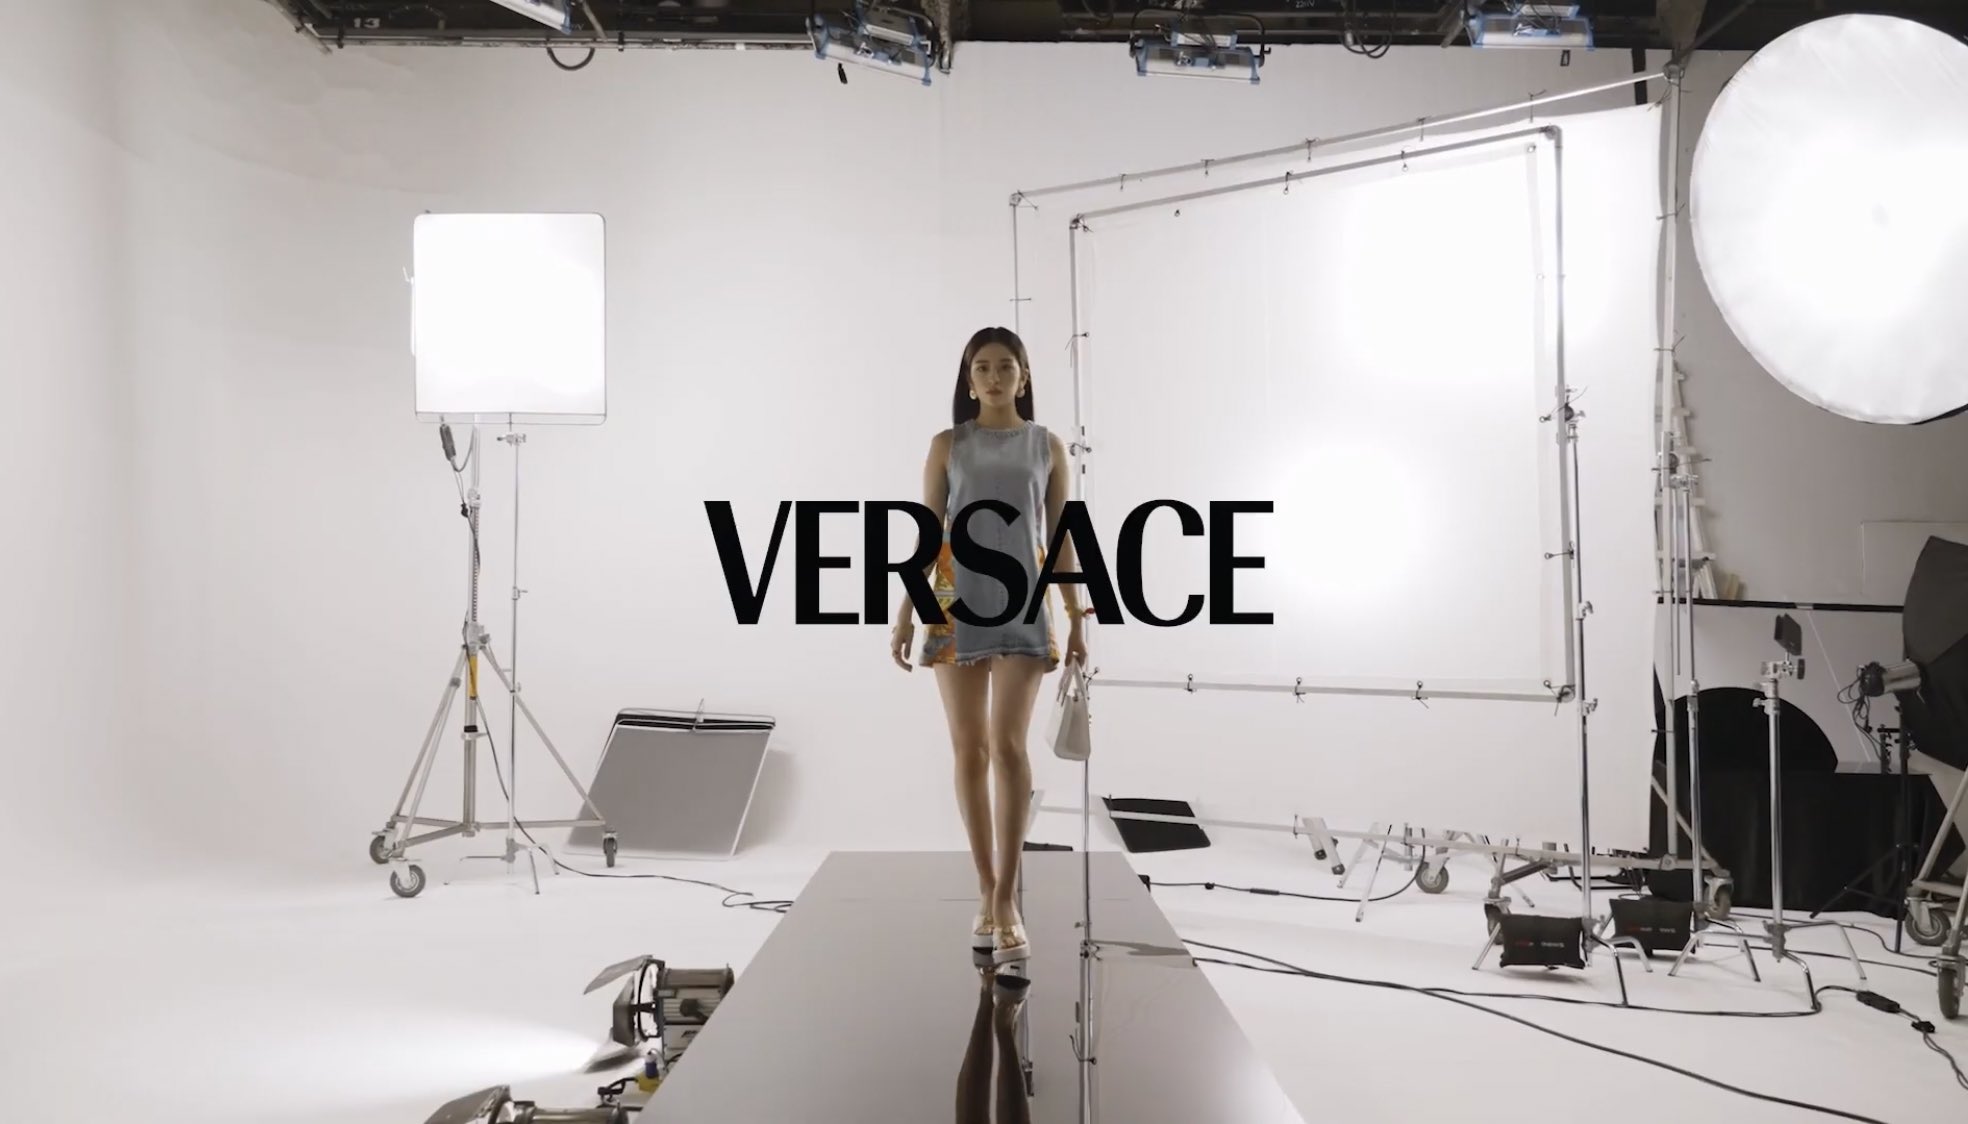 IVE's Yujin joins 'Versace's global 2022 spring/summer campaign